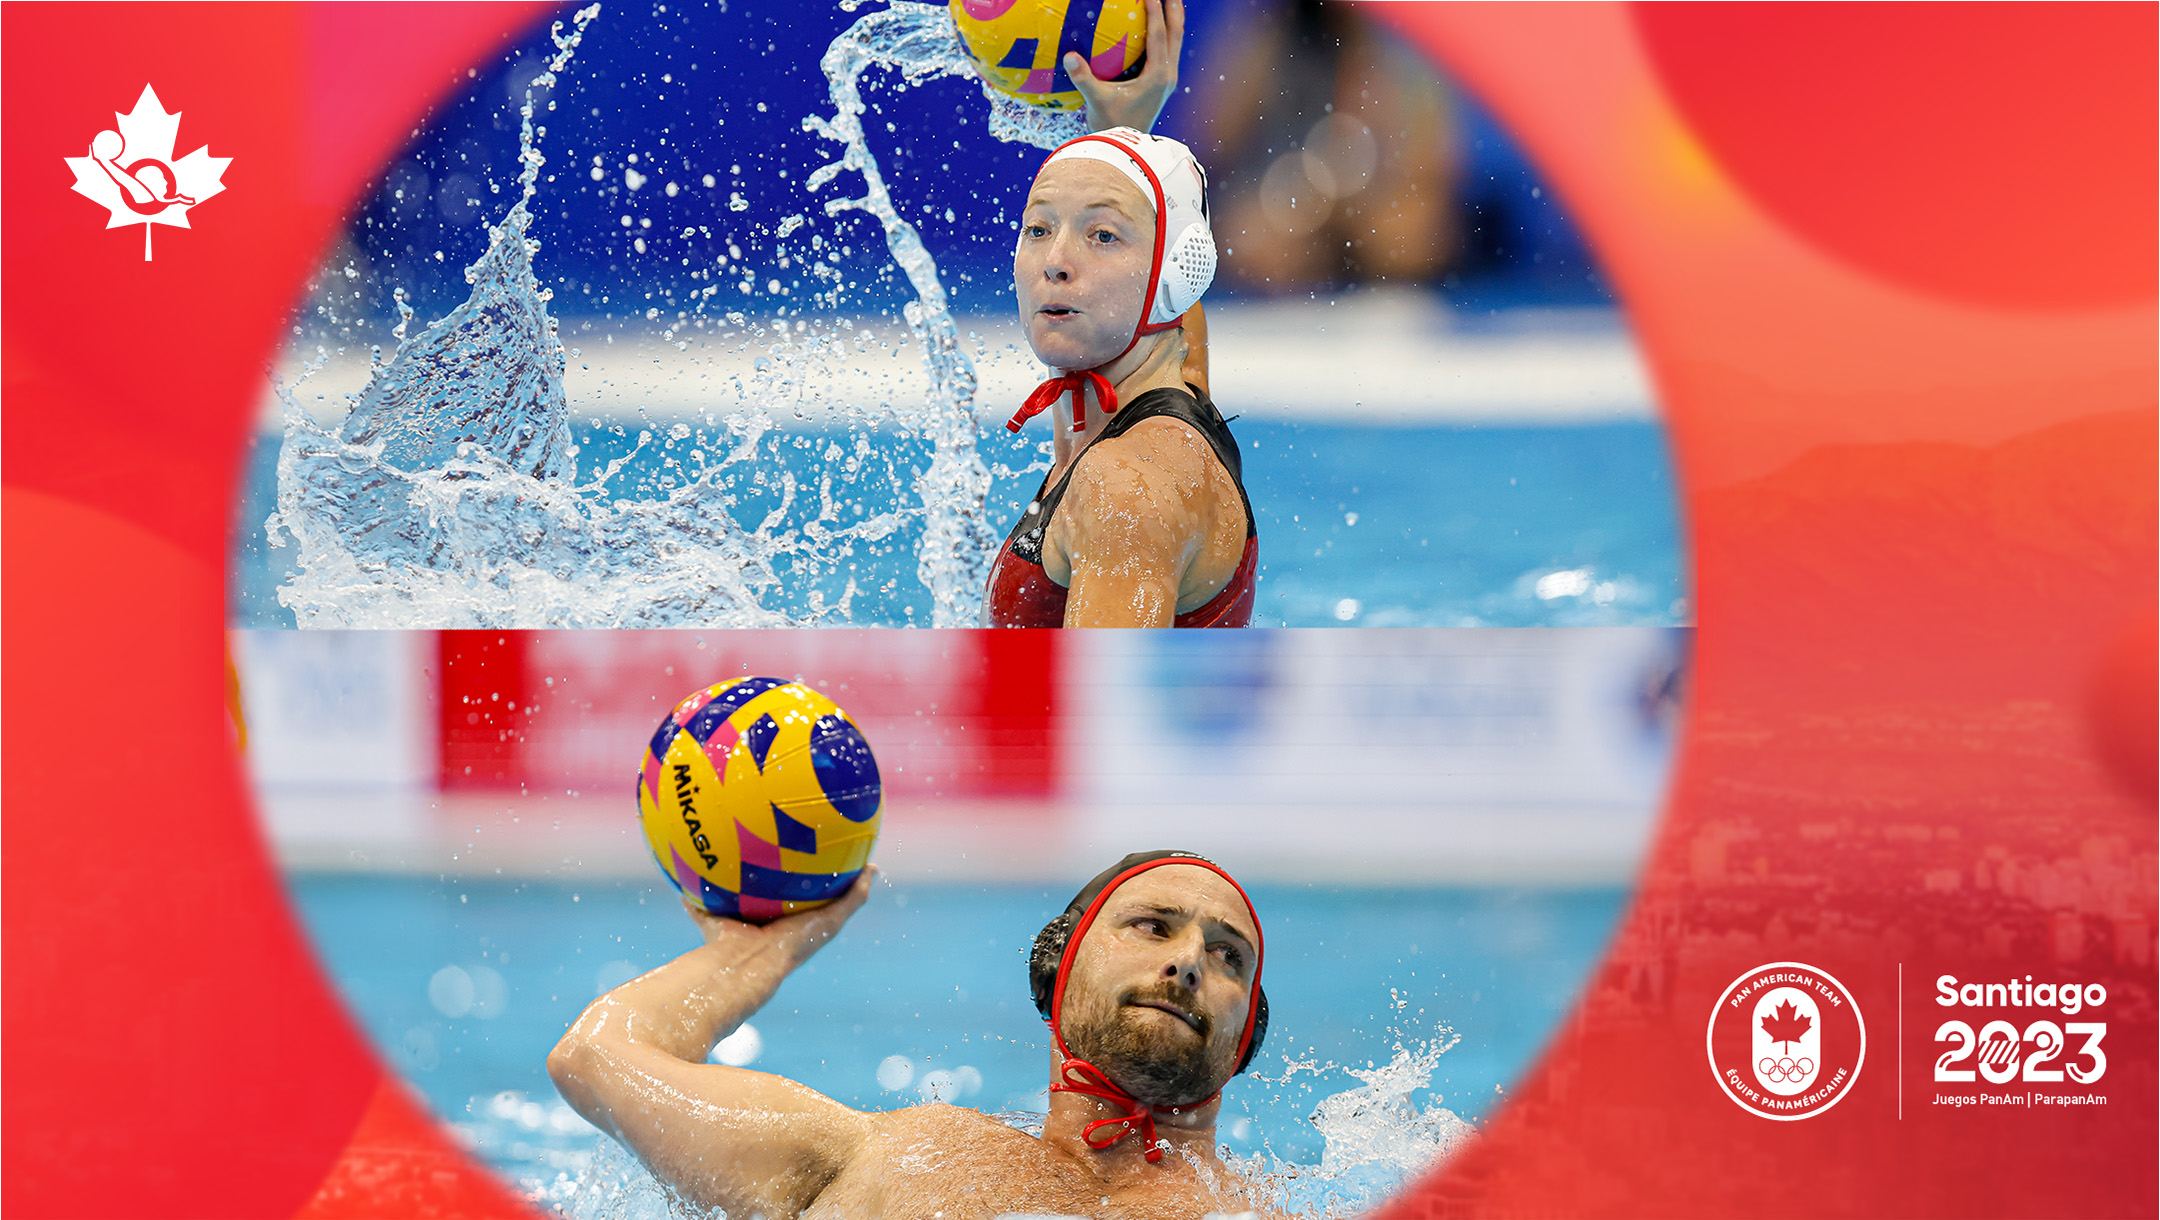 Canada's Santiago 2023 men's and women's water polo teams